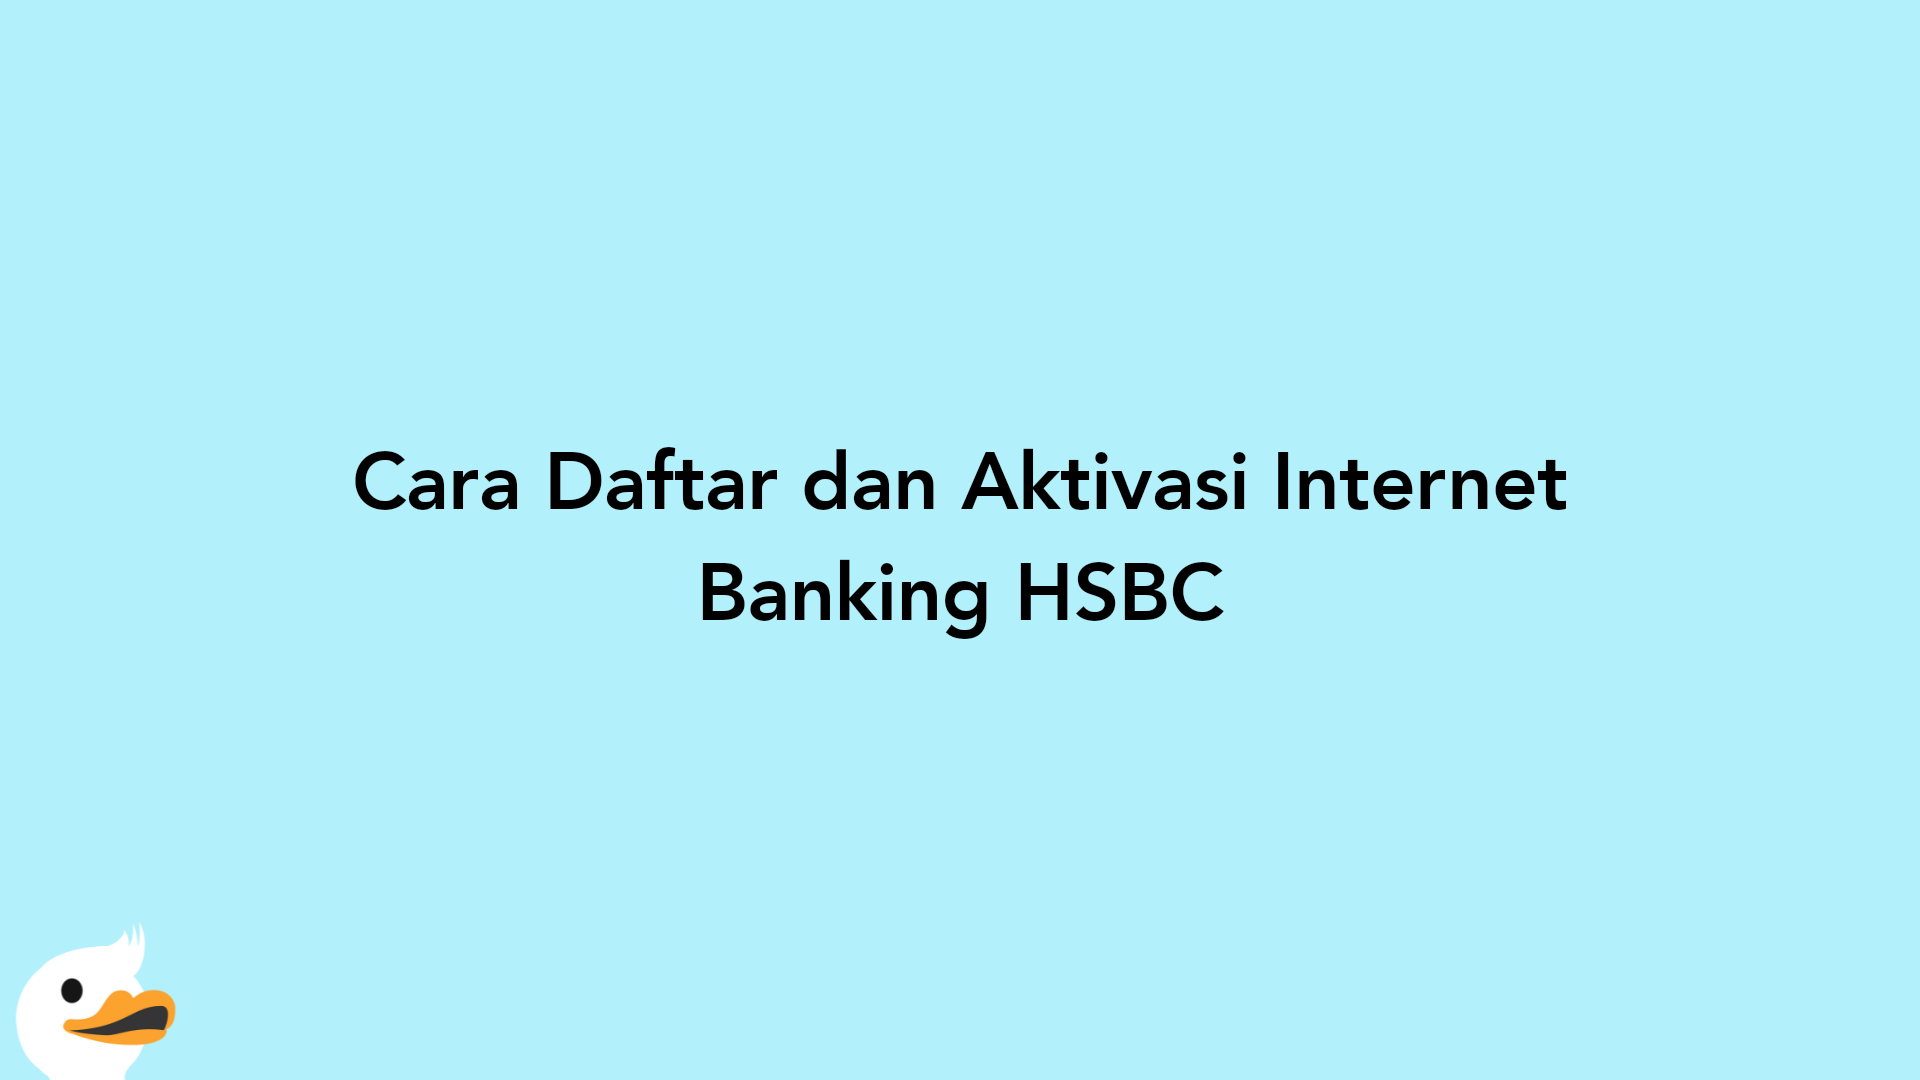 Cara Daftar dan Aktivasi Internet Banking HSBC